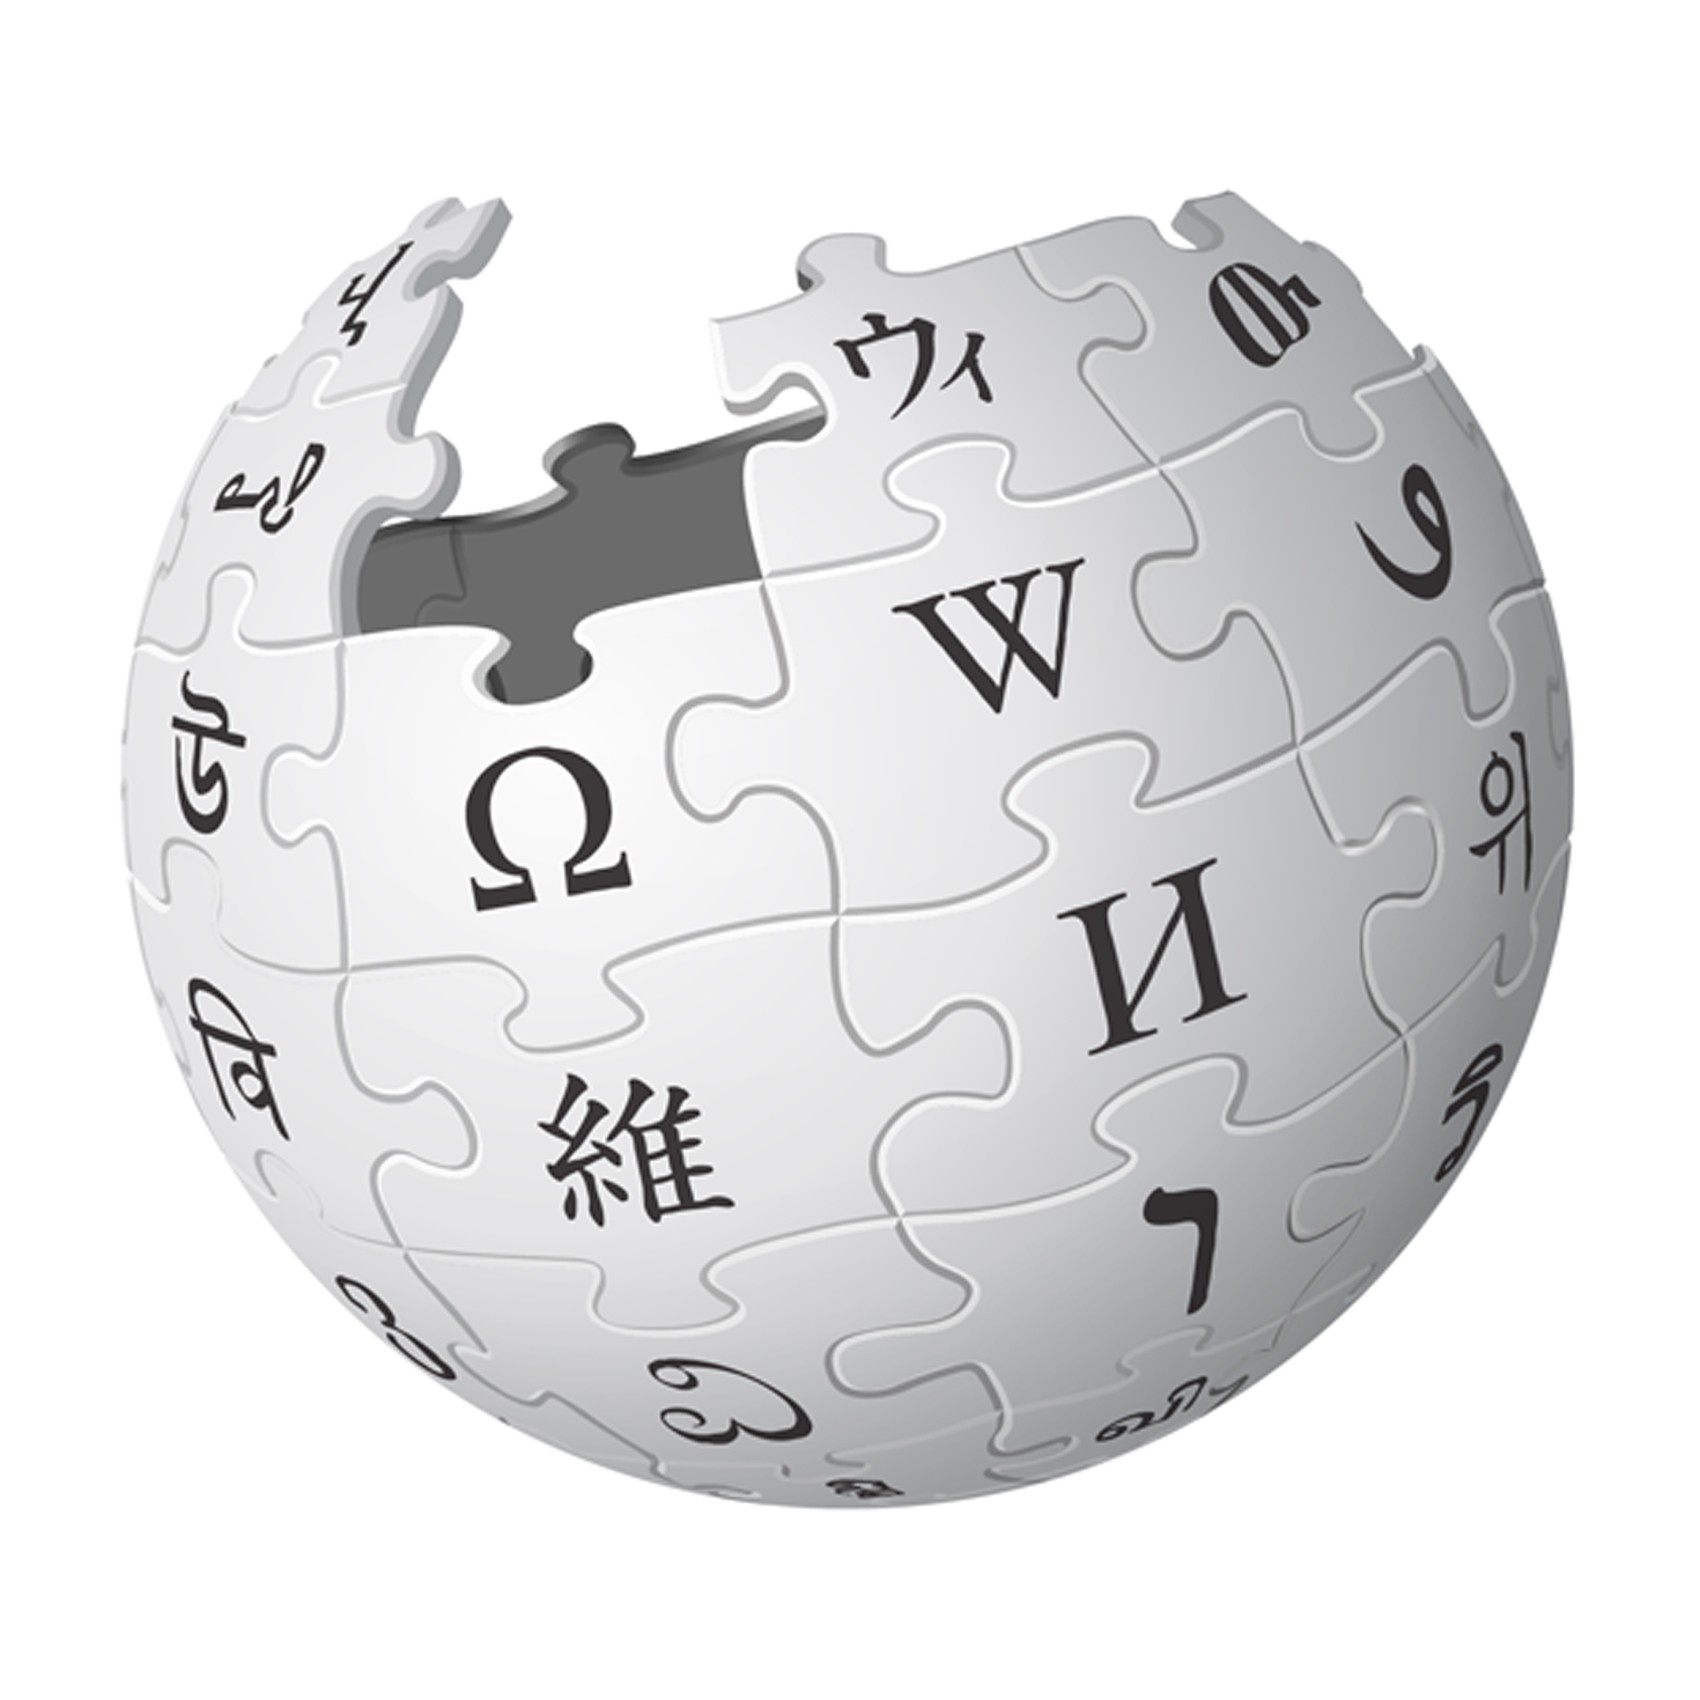 Wikipédia lança código de conduta para combater abusos thumbnail